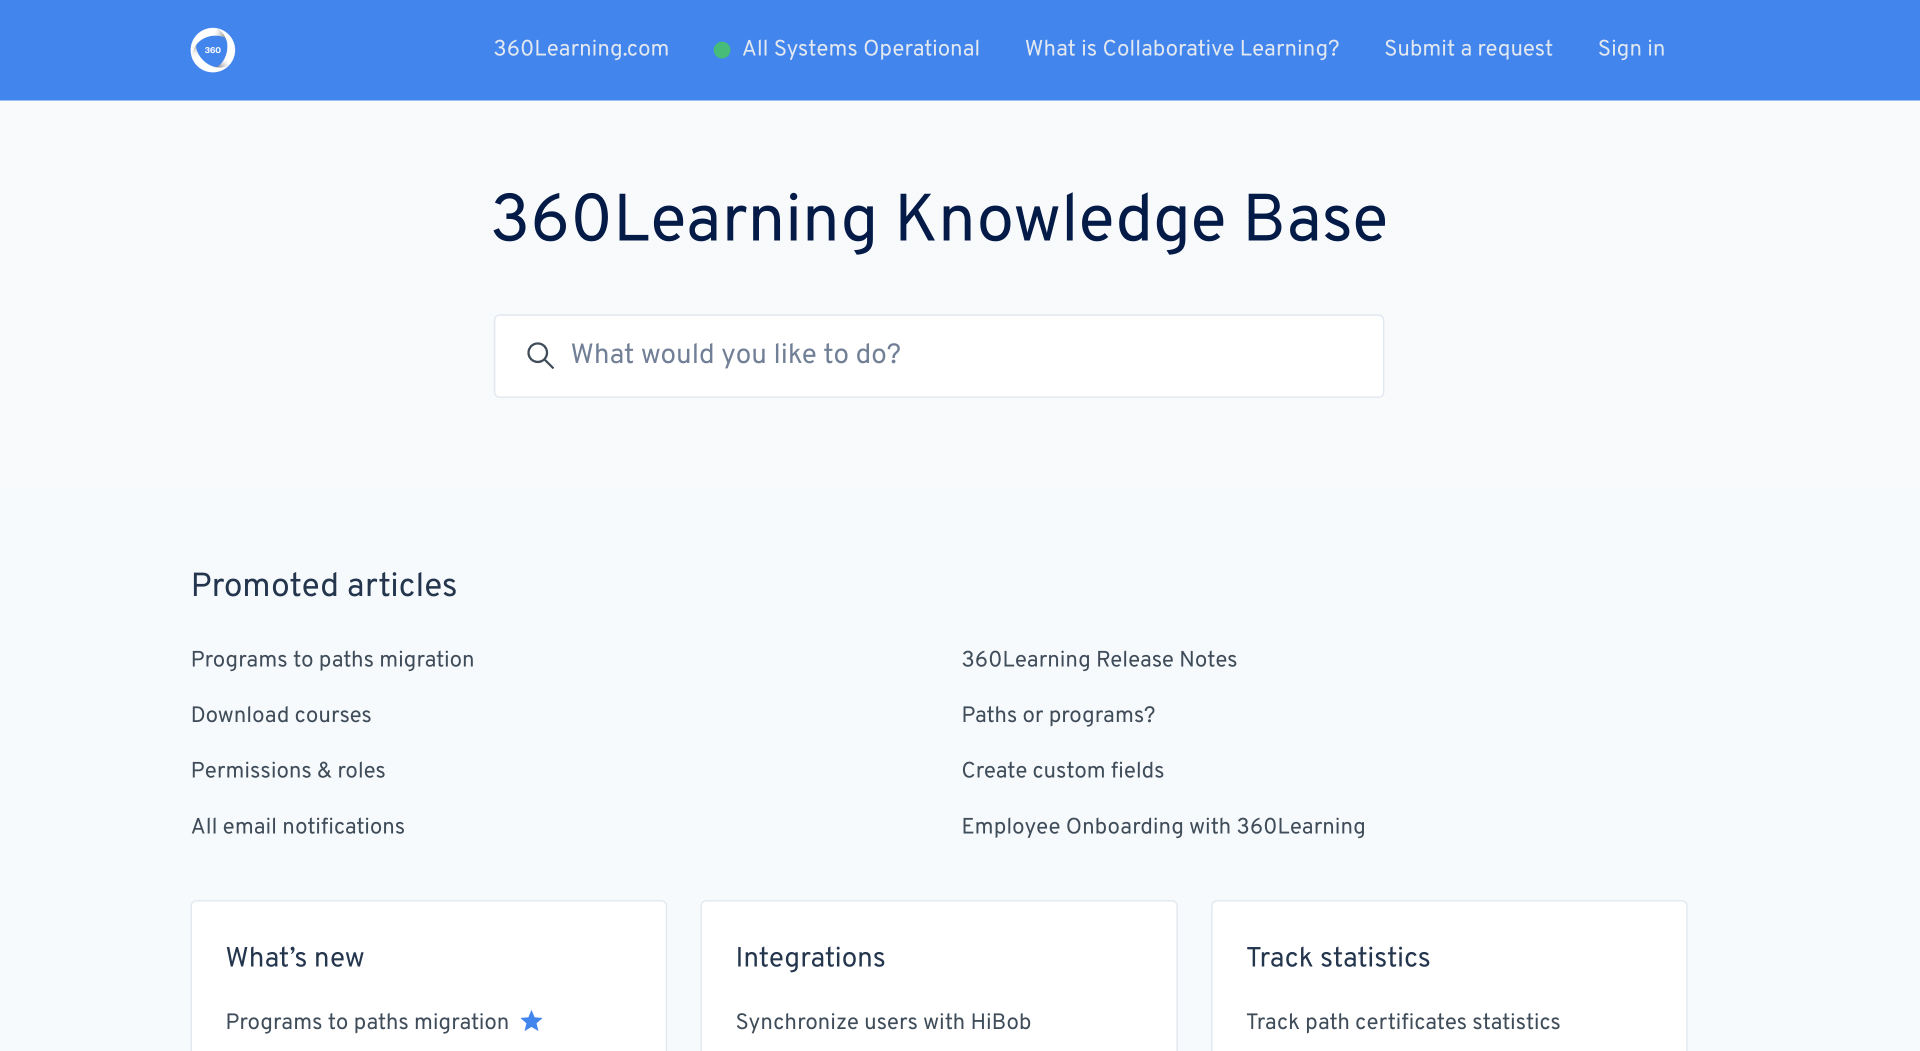 360Learning Knowledge Base